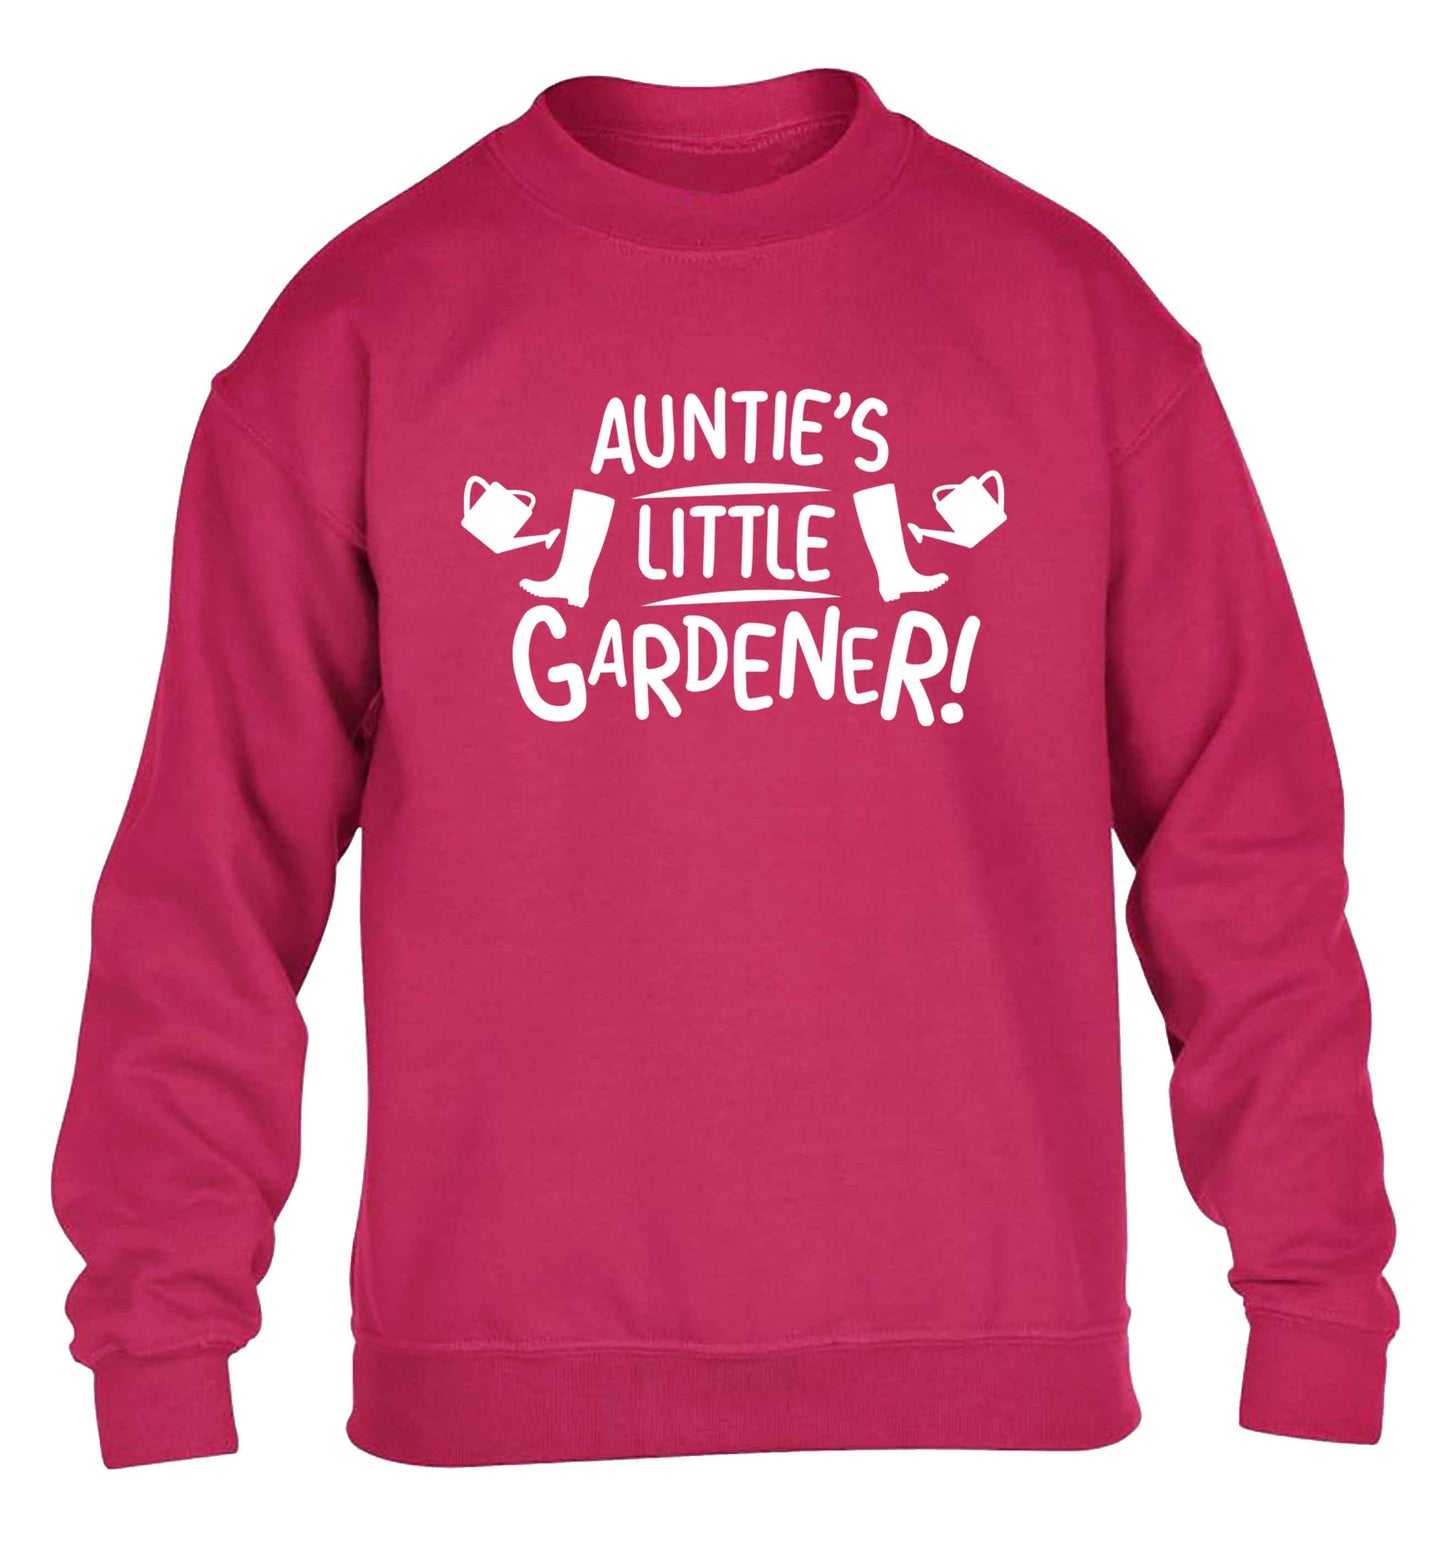 Auntie's little gardener children's pink sweater 12-13 Years